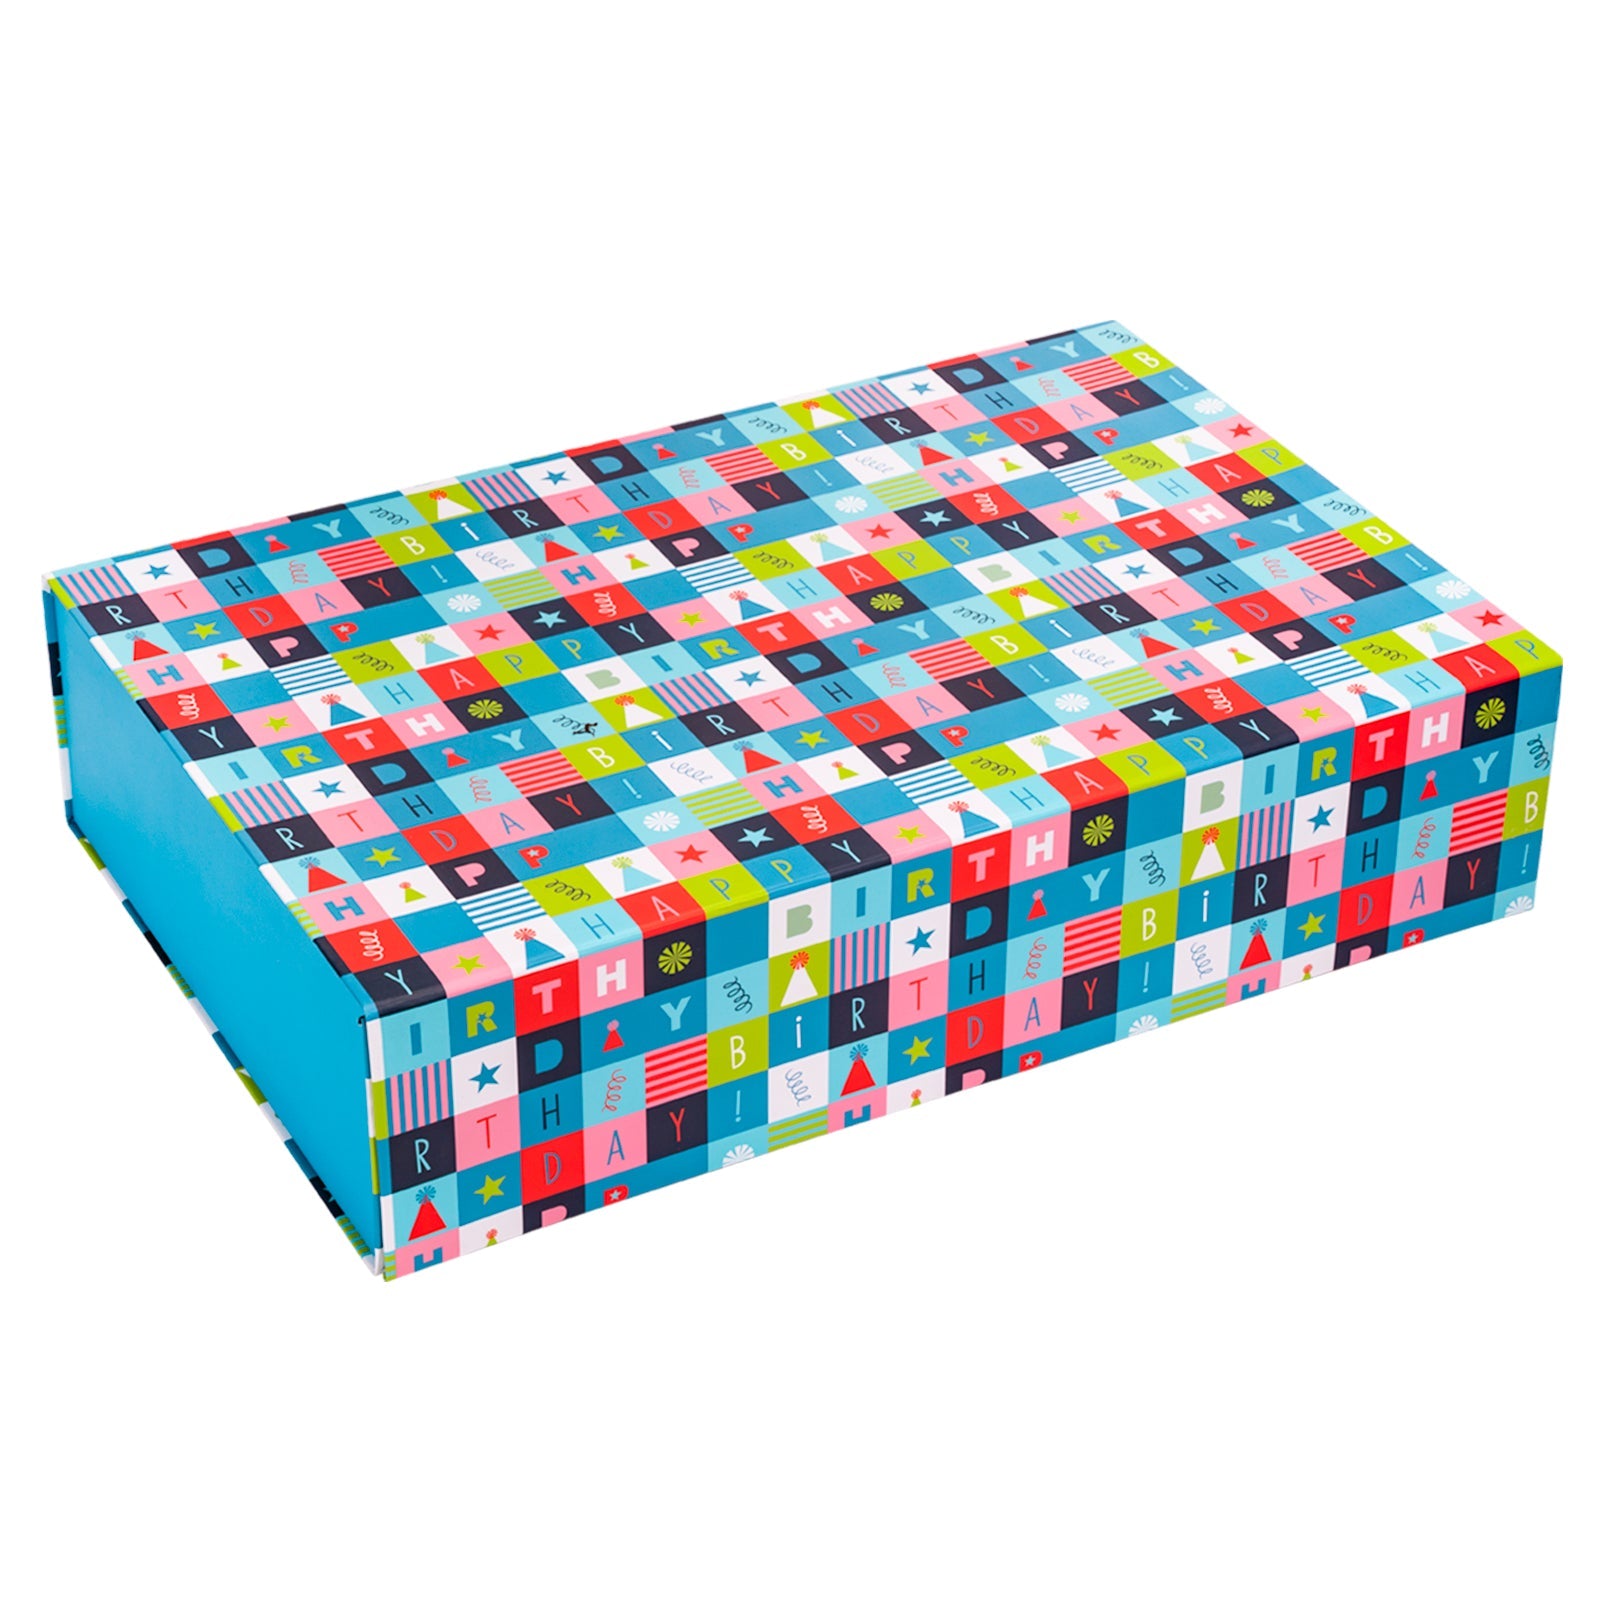 20.7x13.6x5 Inch Magnetic Closure Box Birthday Sudoku